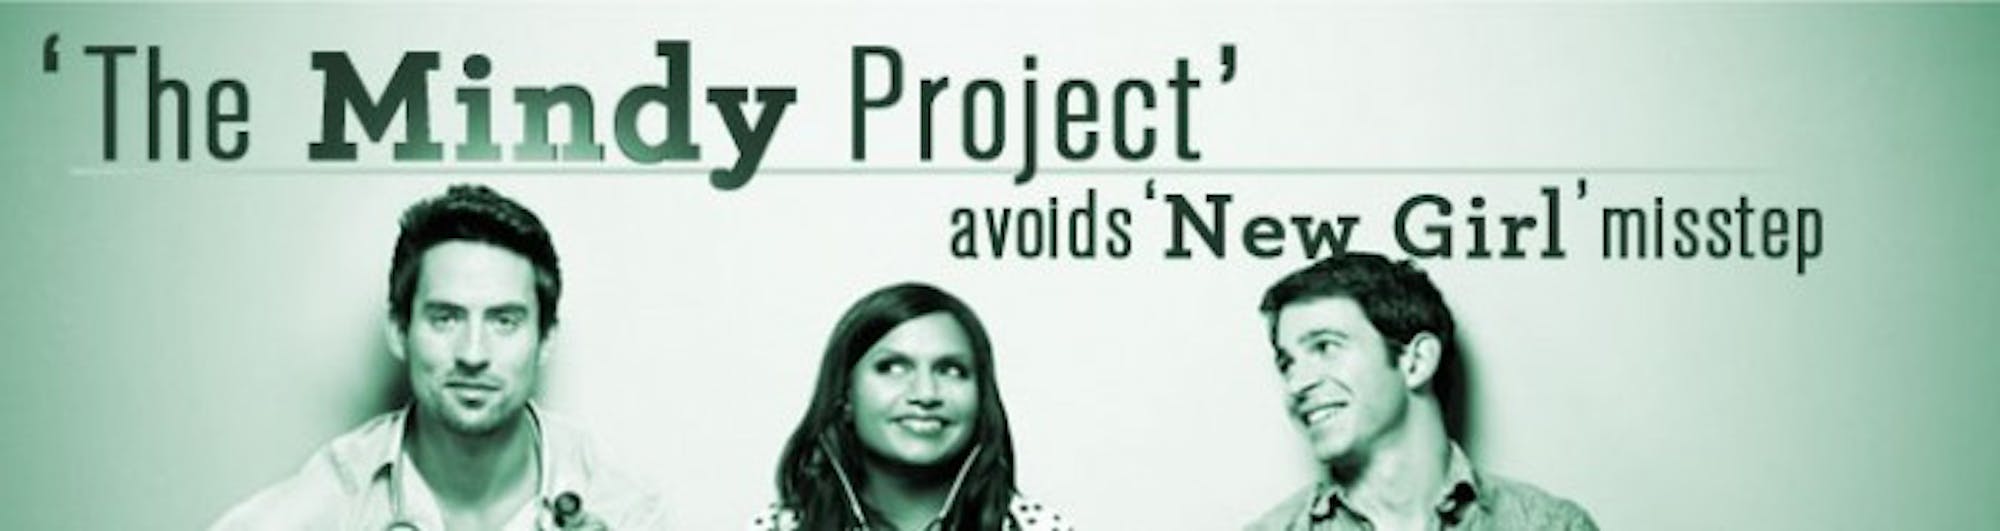 mindy-project-WEB